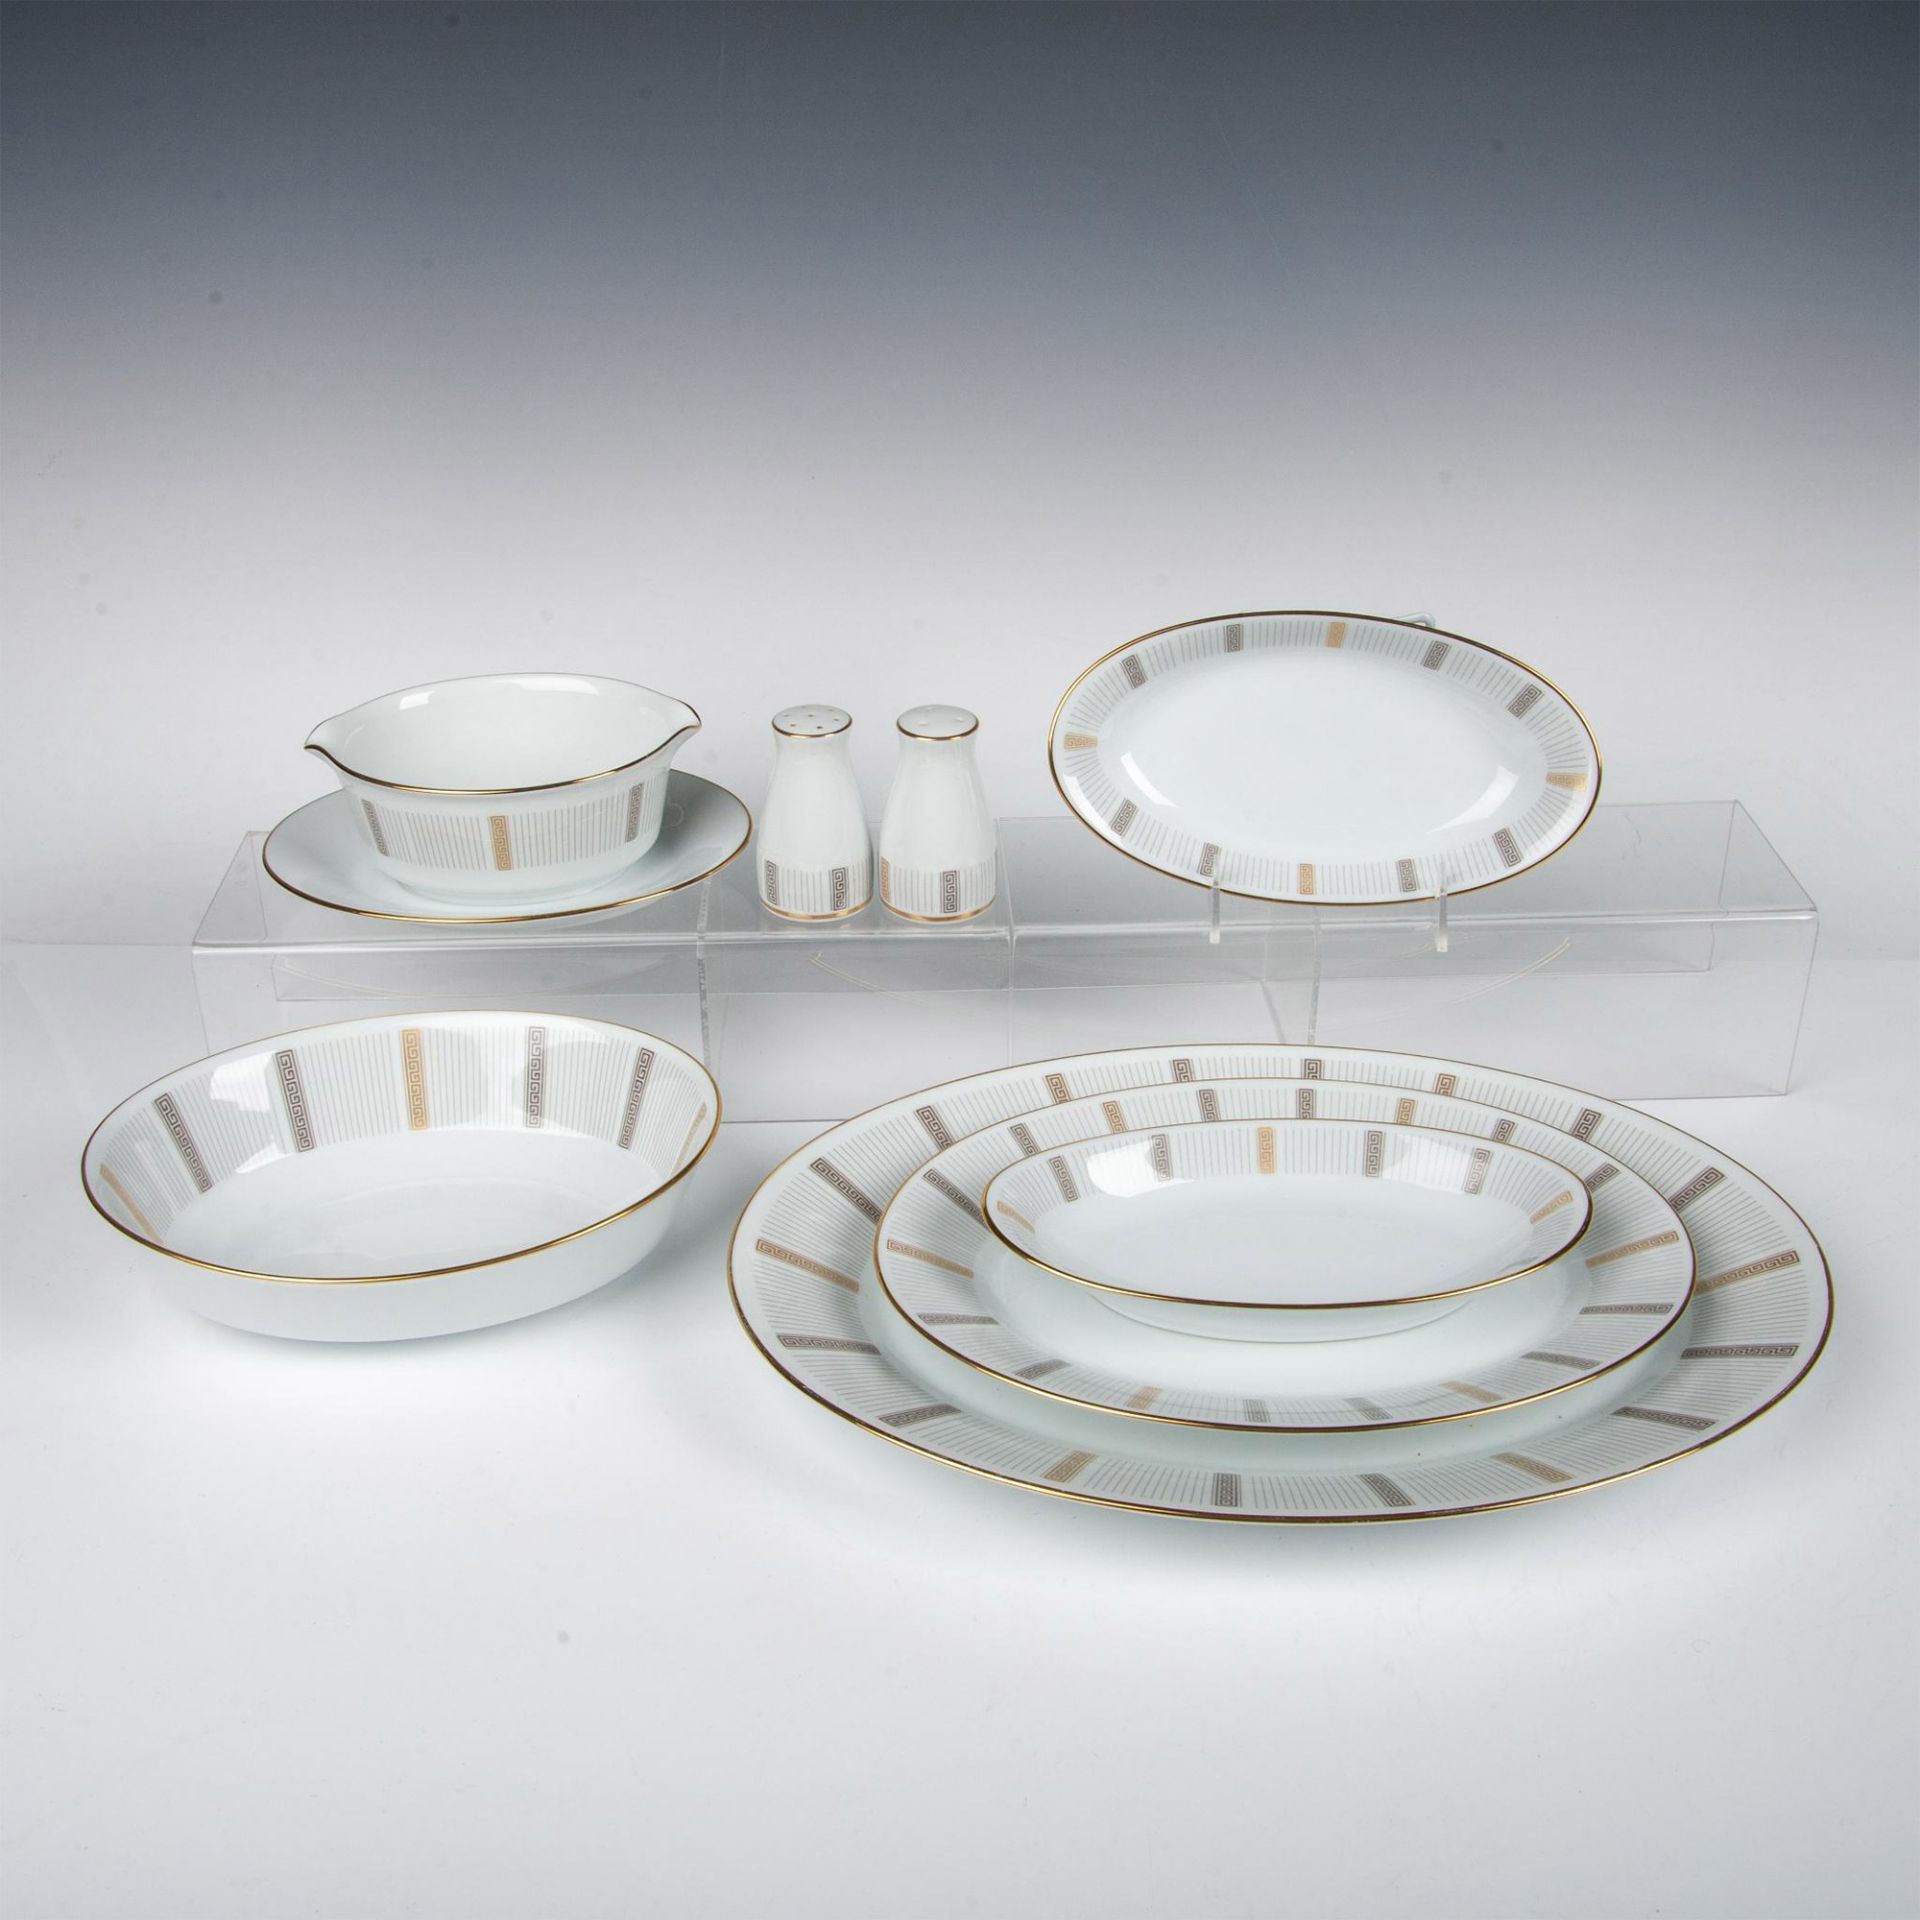 8pc Noritake Porcelain Server Ware, Humoresque - Image 2 of 4